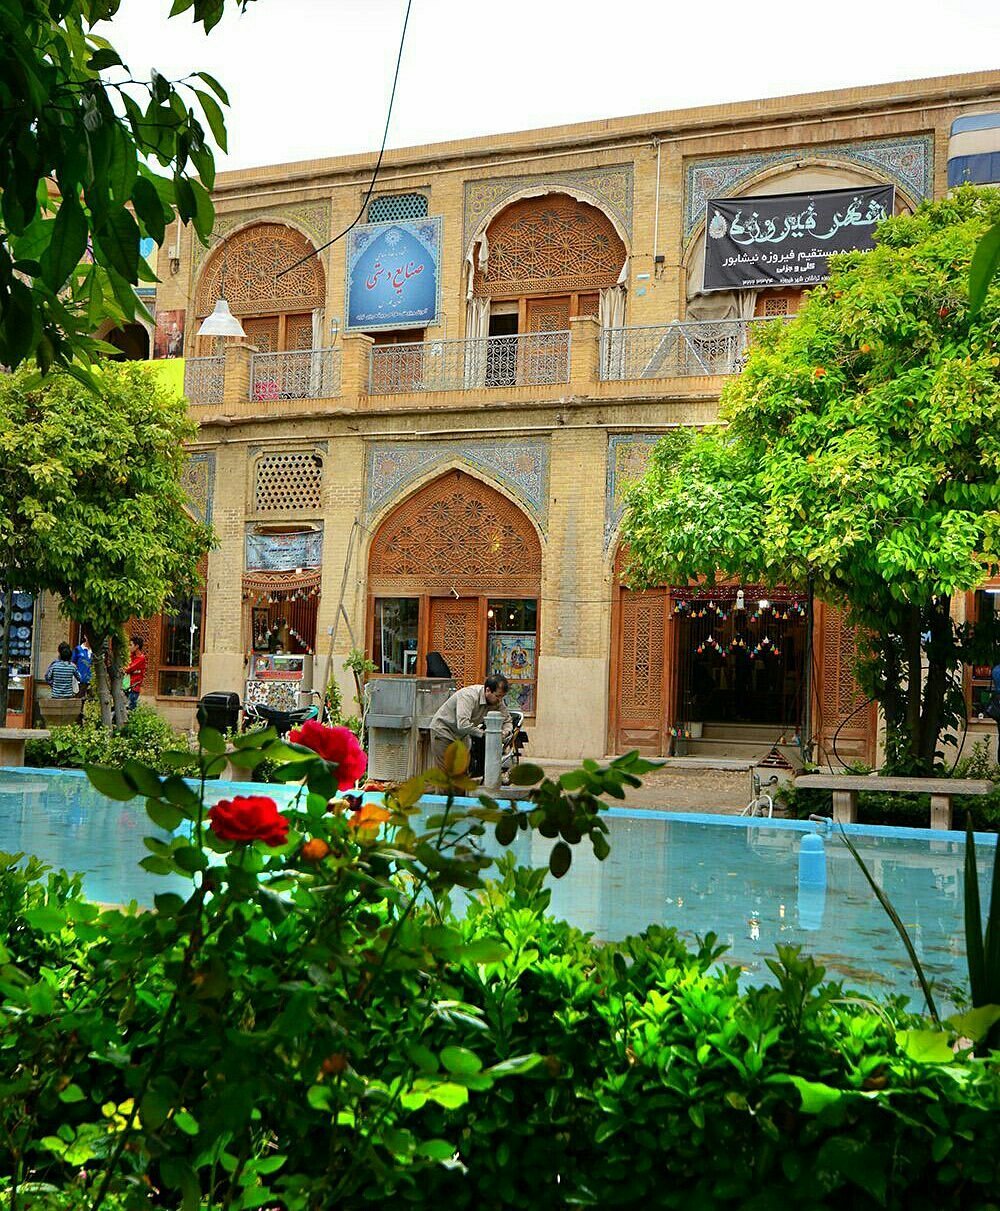 Saraye Moshir, Shiraz